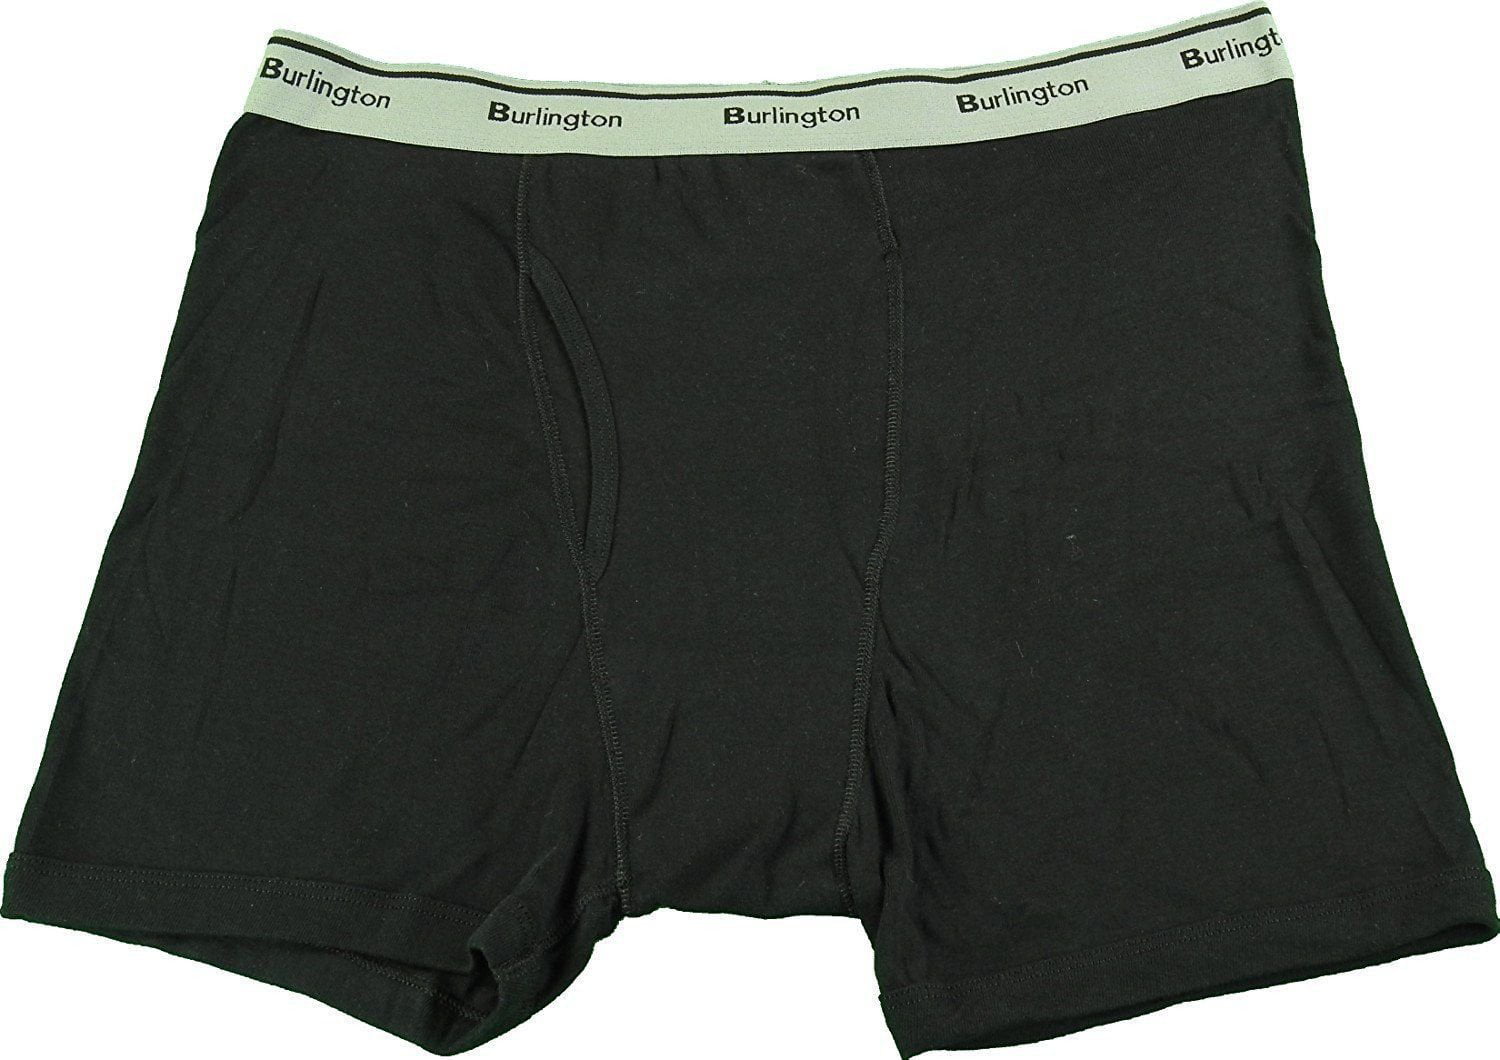 Kayser-Roth - Burlington 4-Pack Men's Size Small Premium Boxer Briefs ...